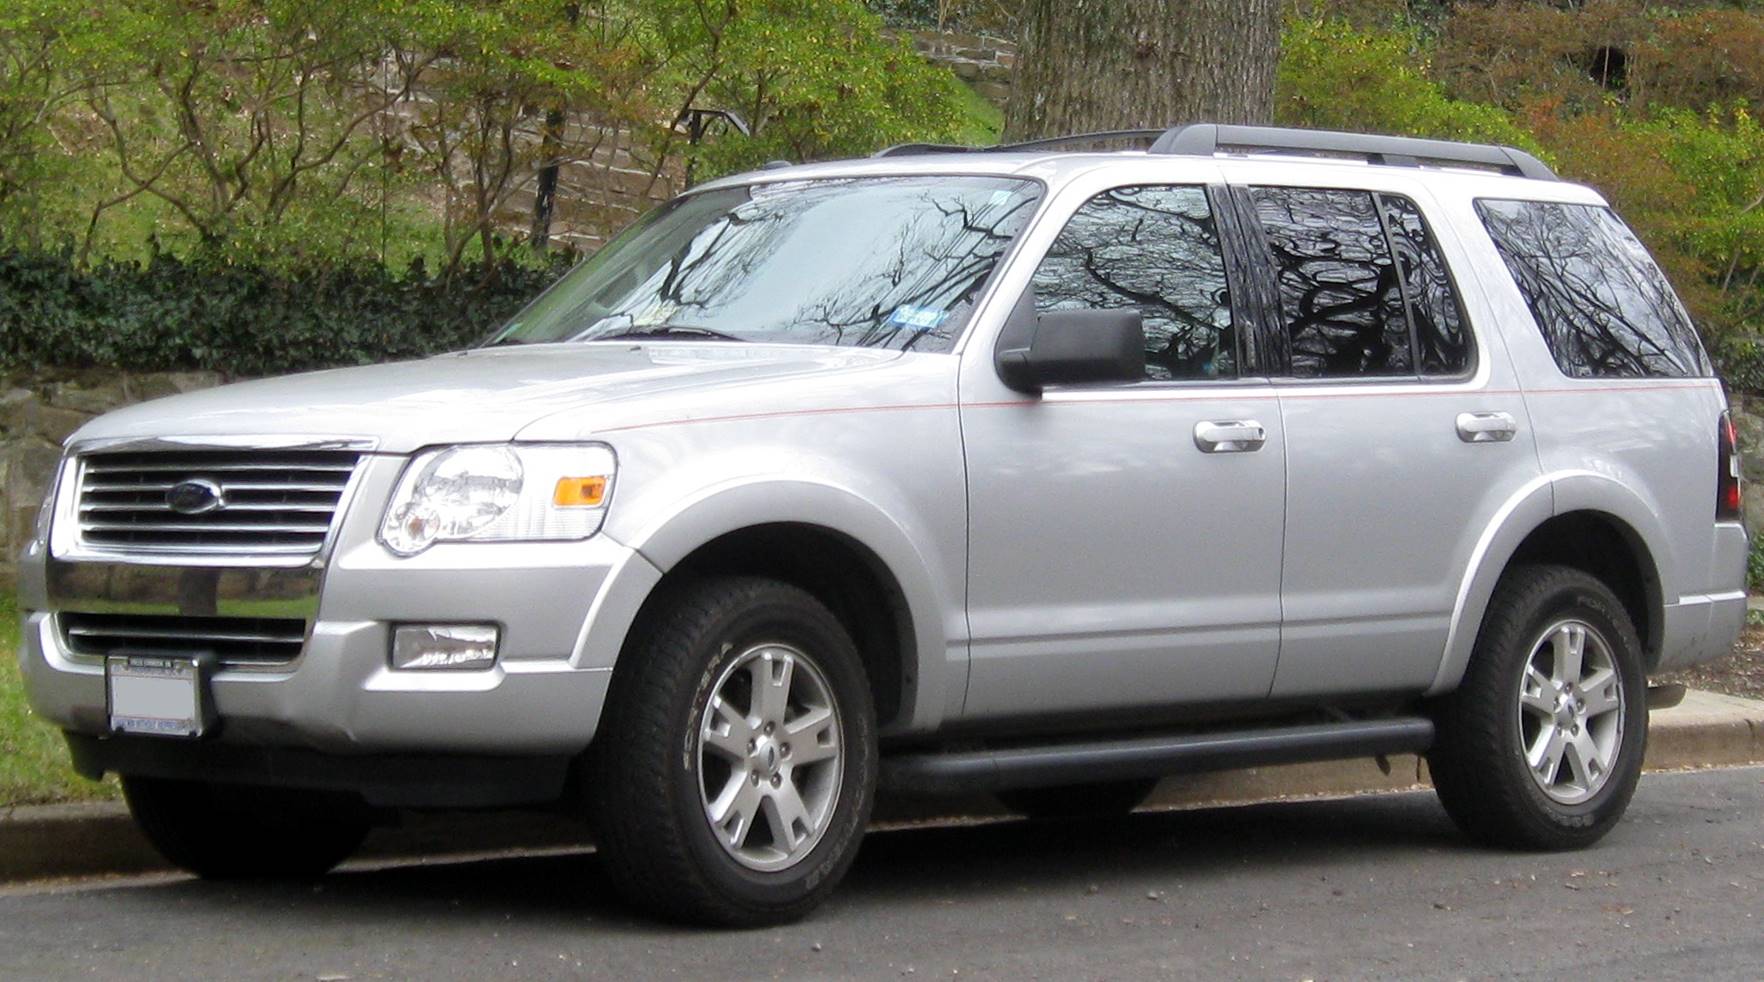 2010 Ford Explorer XLT - 4dr SUV 4.0L V6 auto